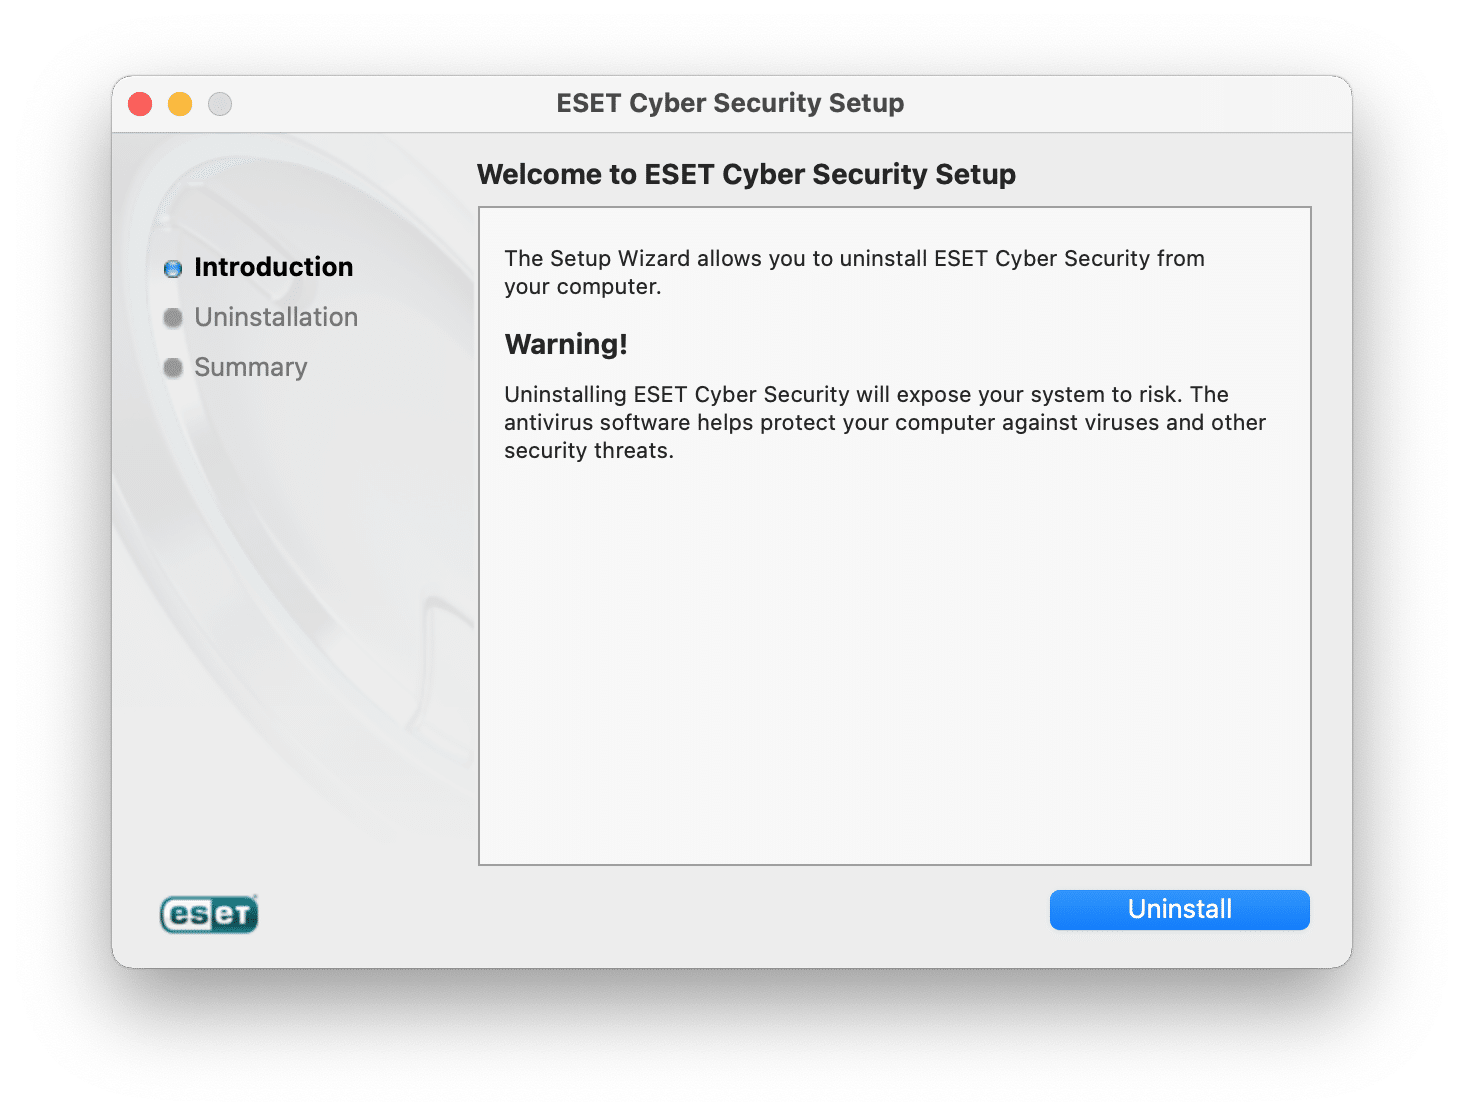 Eset Cyber Security Setup window